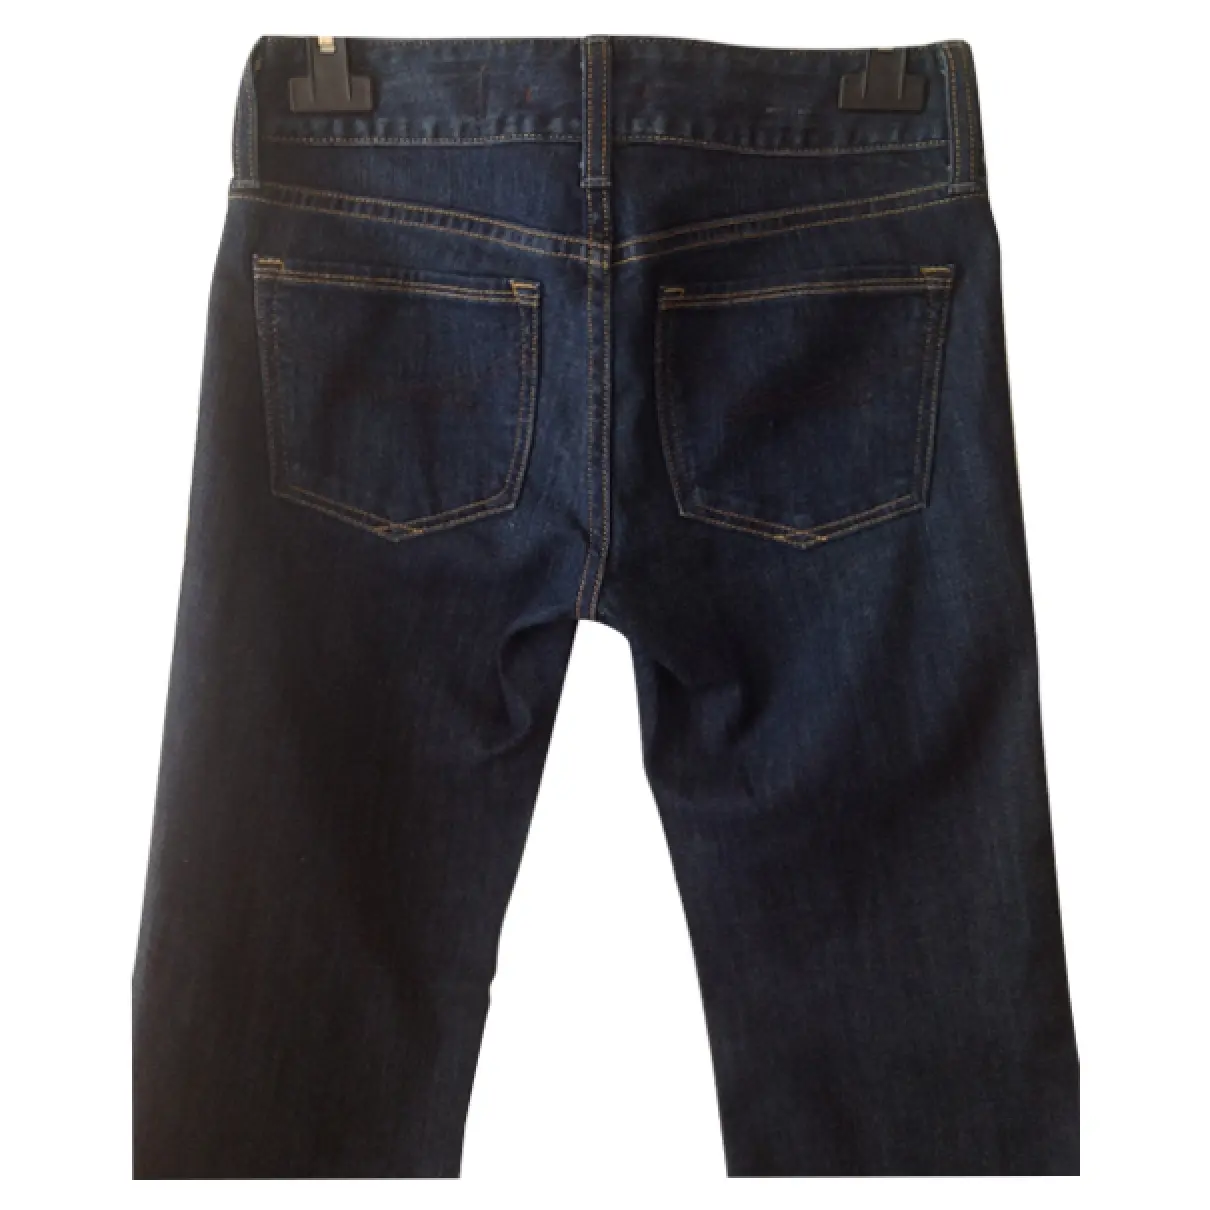 Buy GAP Blue Jeans online